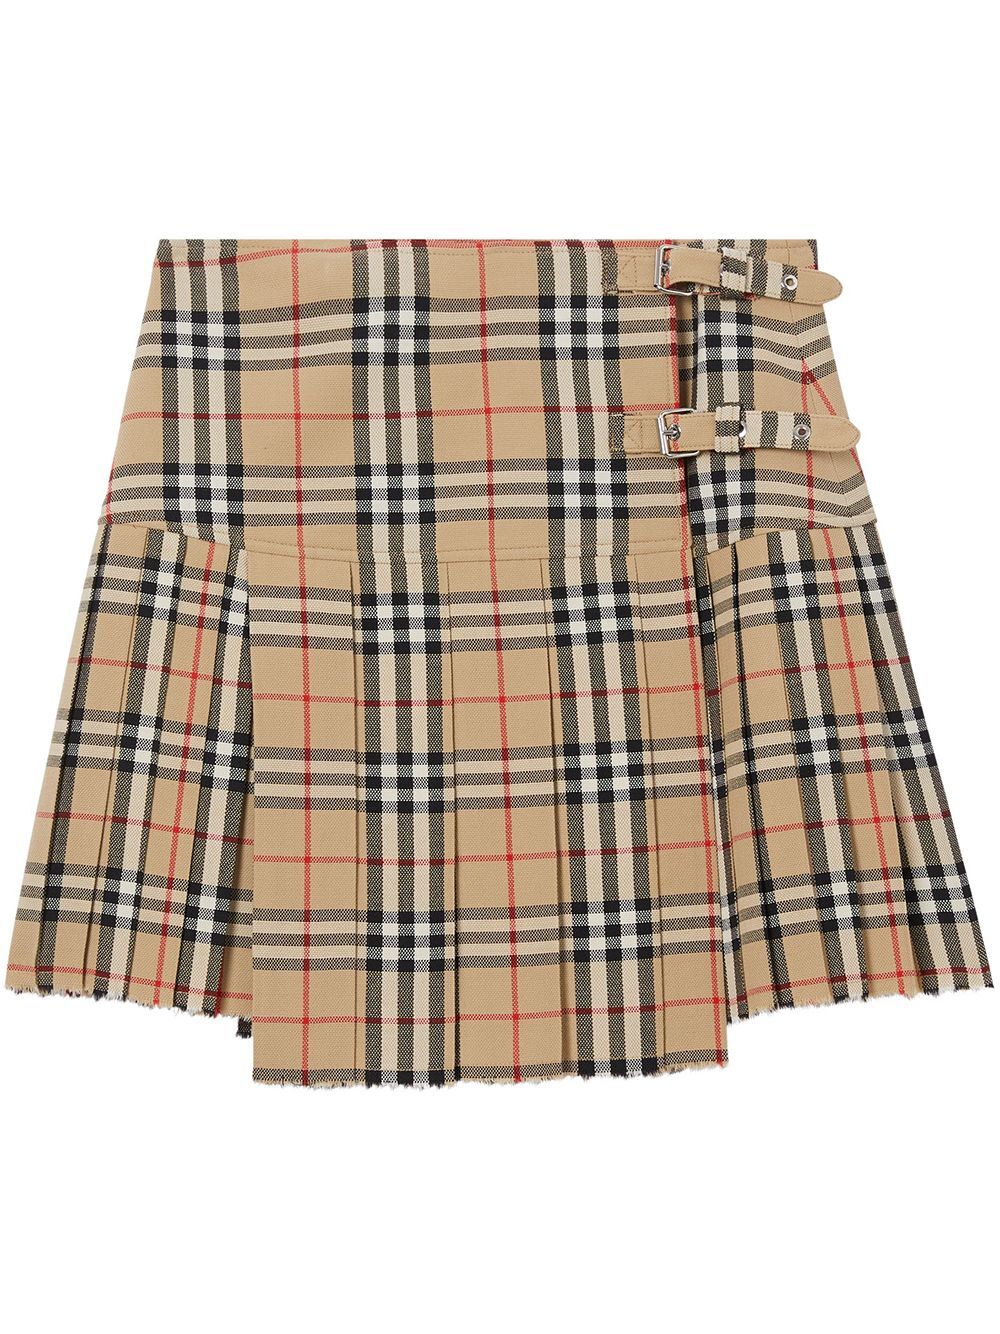 Vintage check skirt